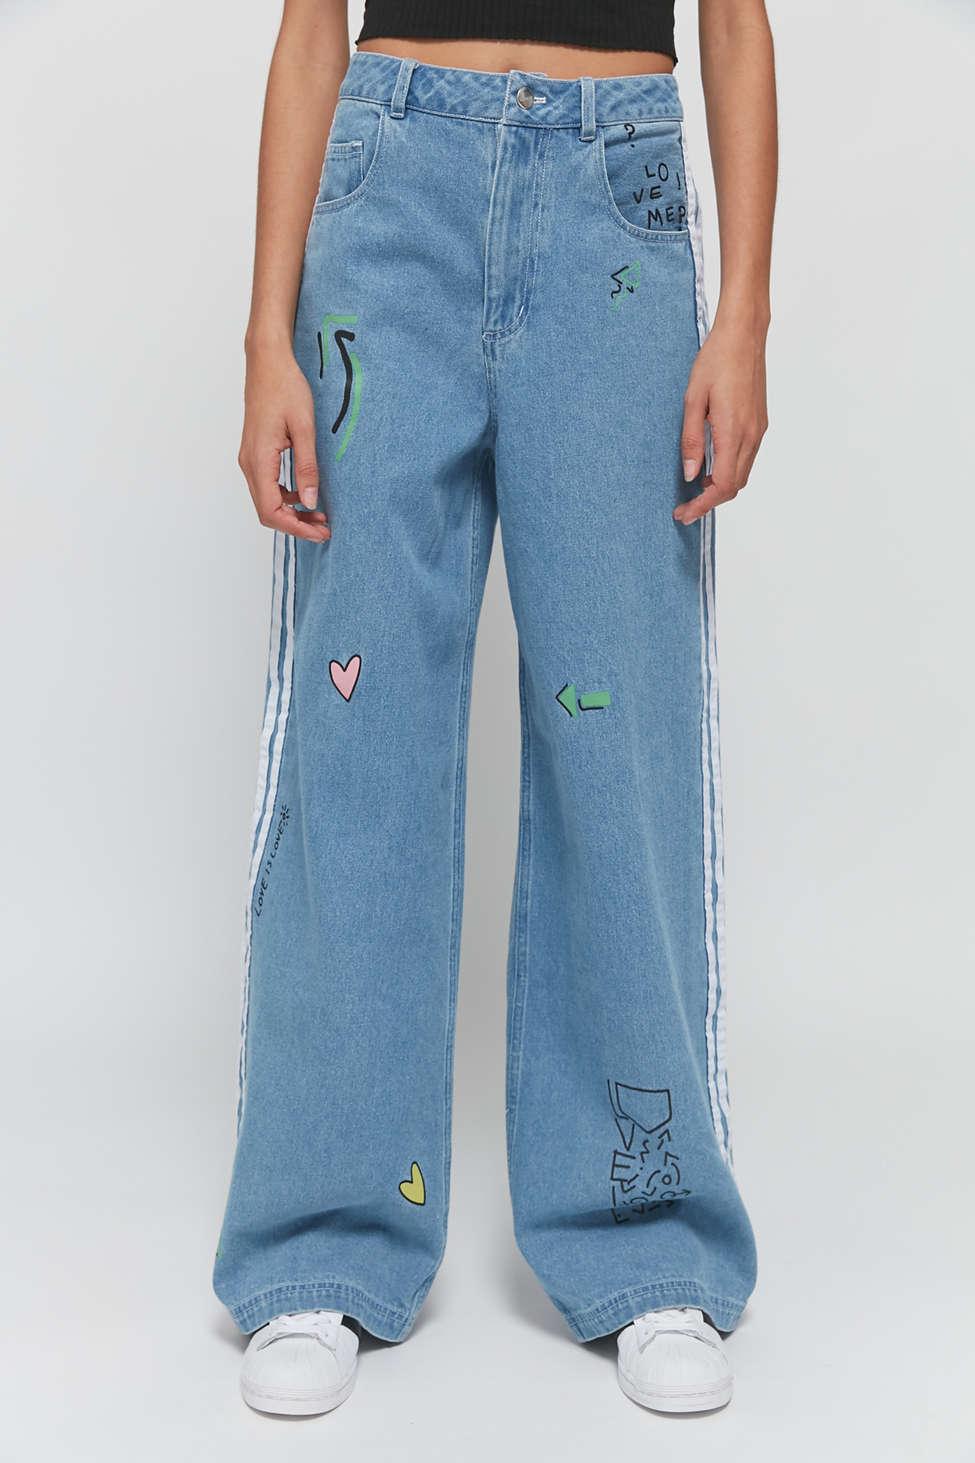 adidas Originals X Fiorucci Snap Button Jean in Blue | Lyst